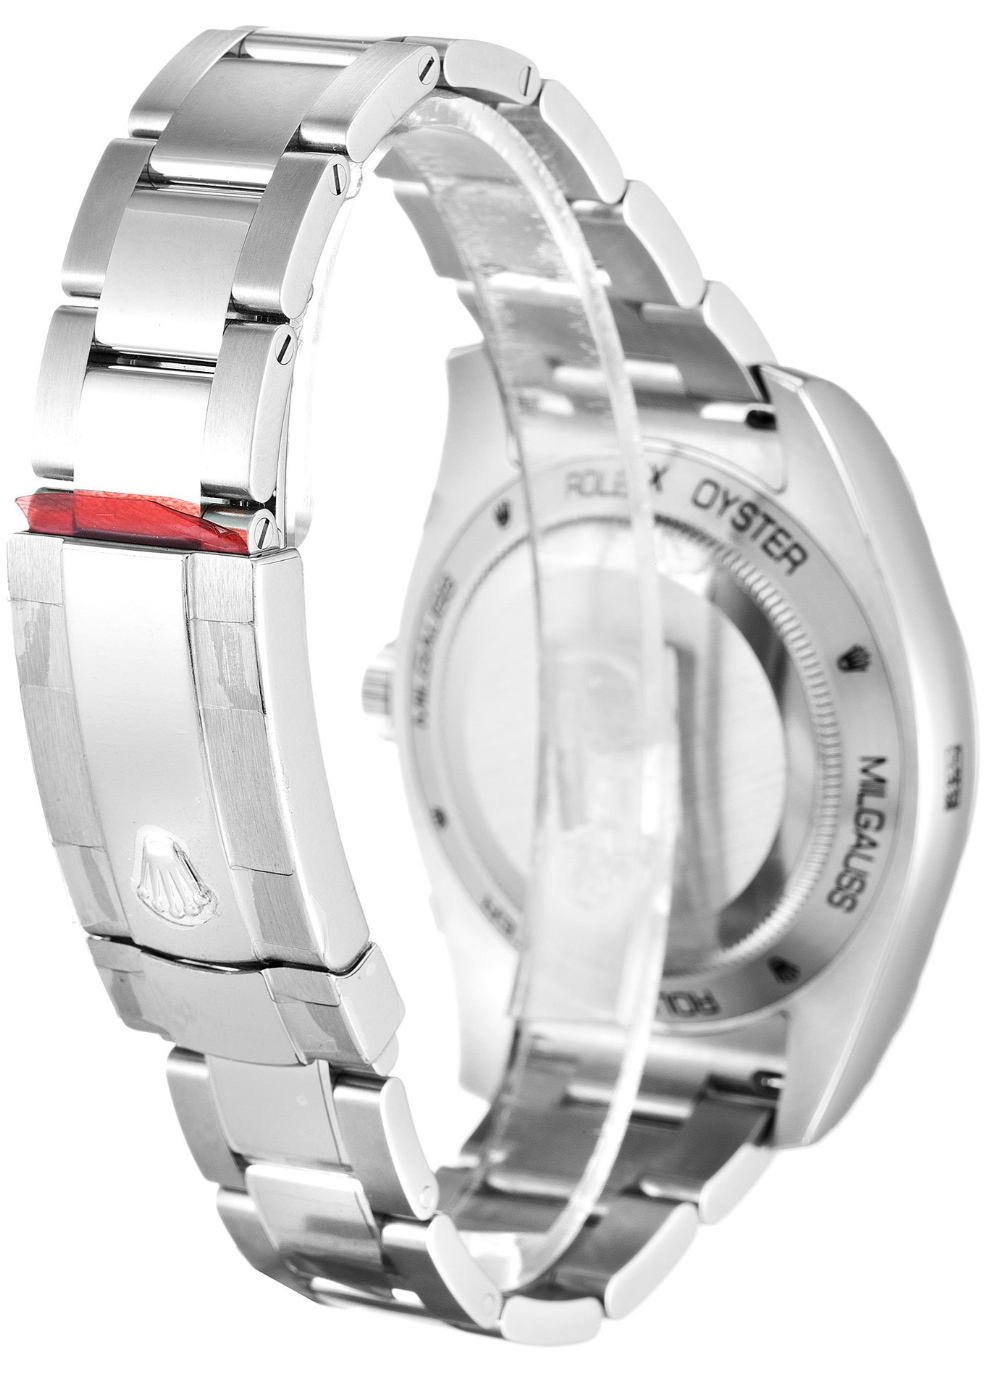 ROLEX MILGAUSS 116400 GV - IP Empire Replica Watches